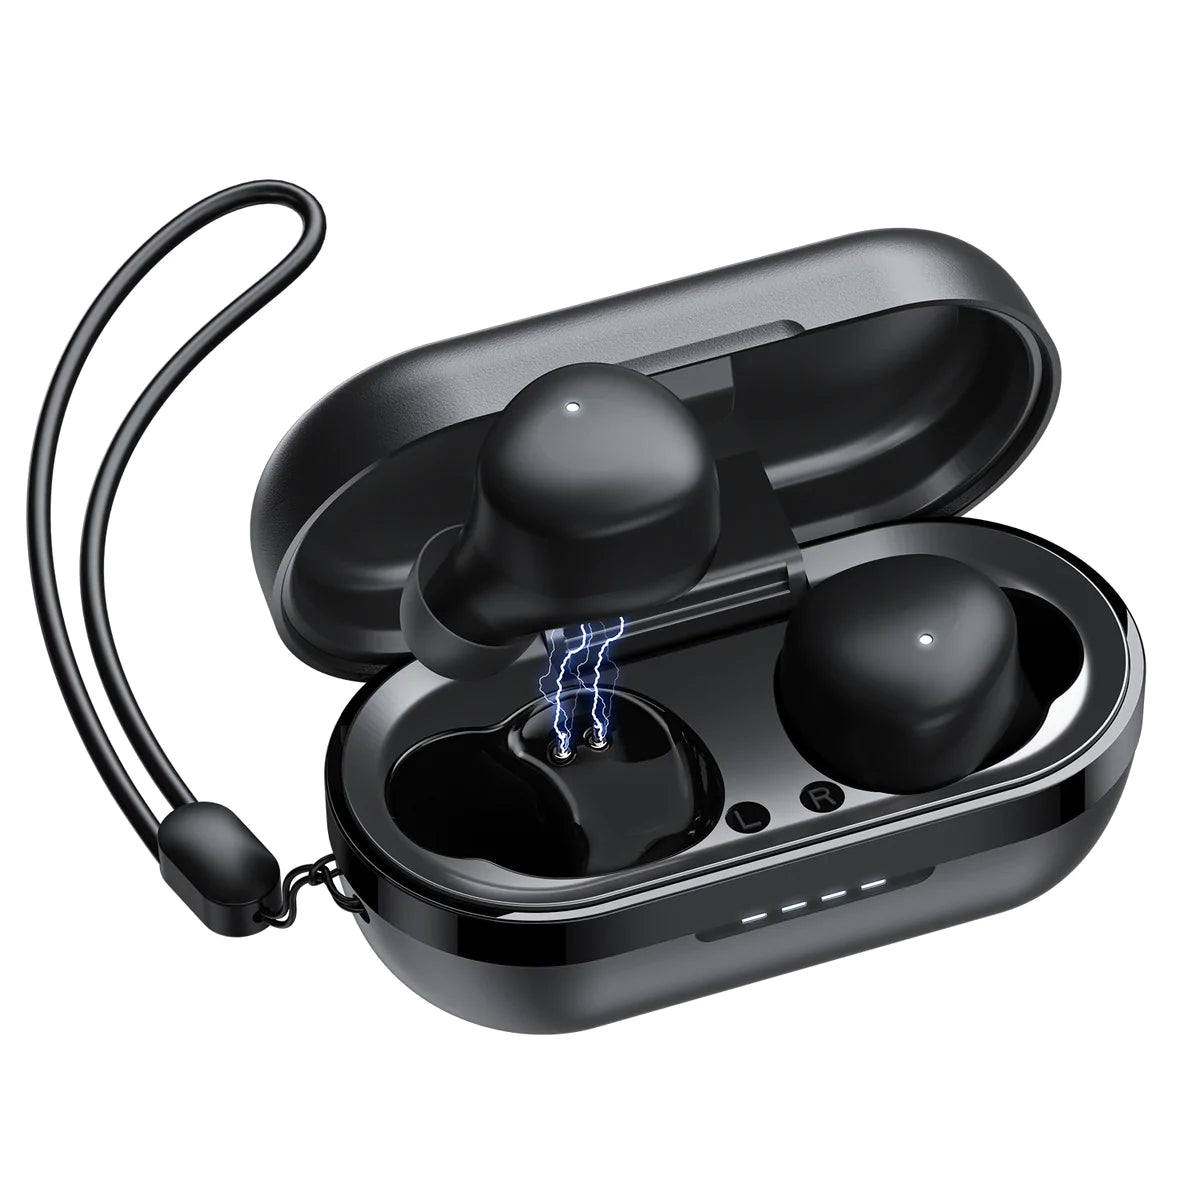 JOYROOM Pro IPX7 Waterproof Earbuds - Black